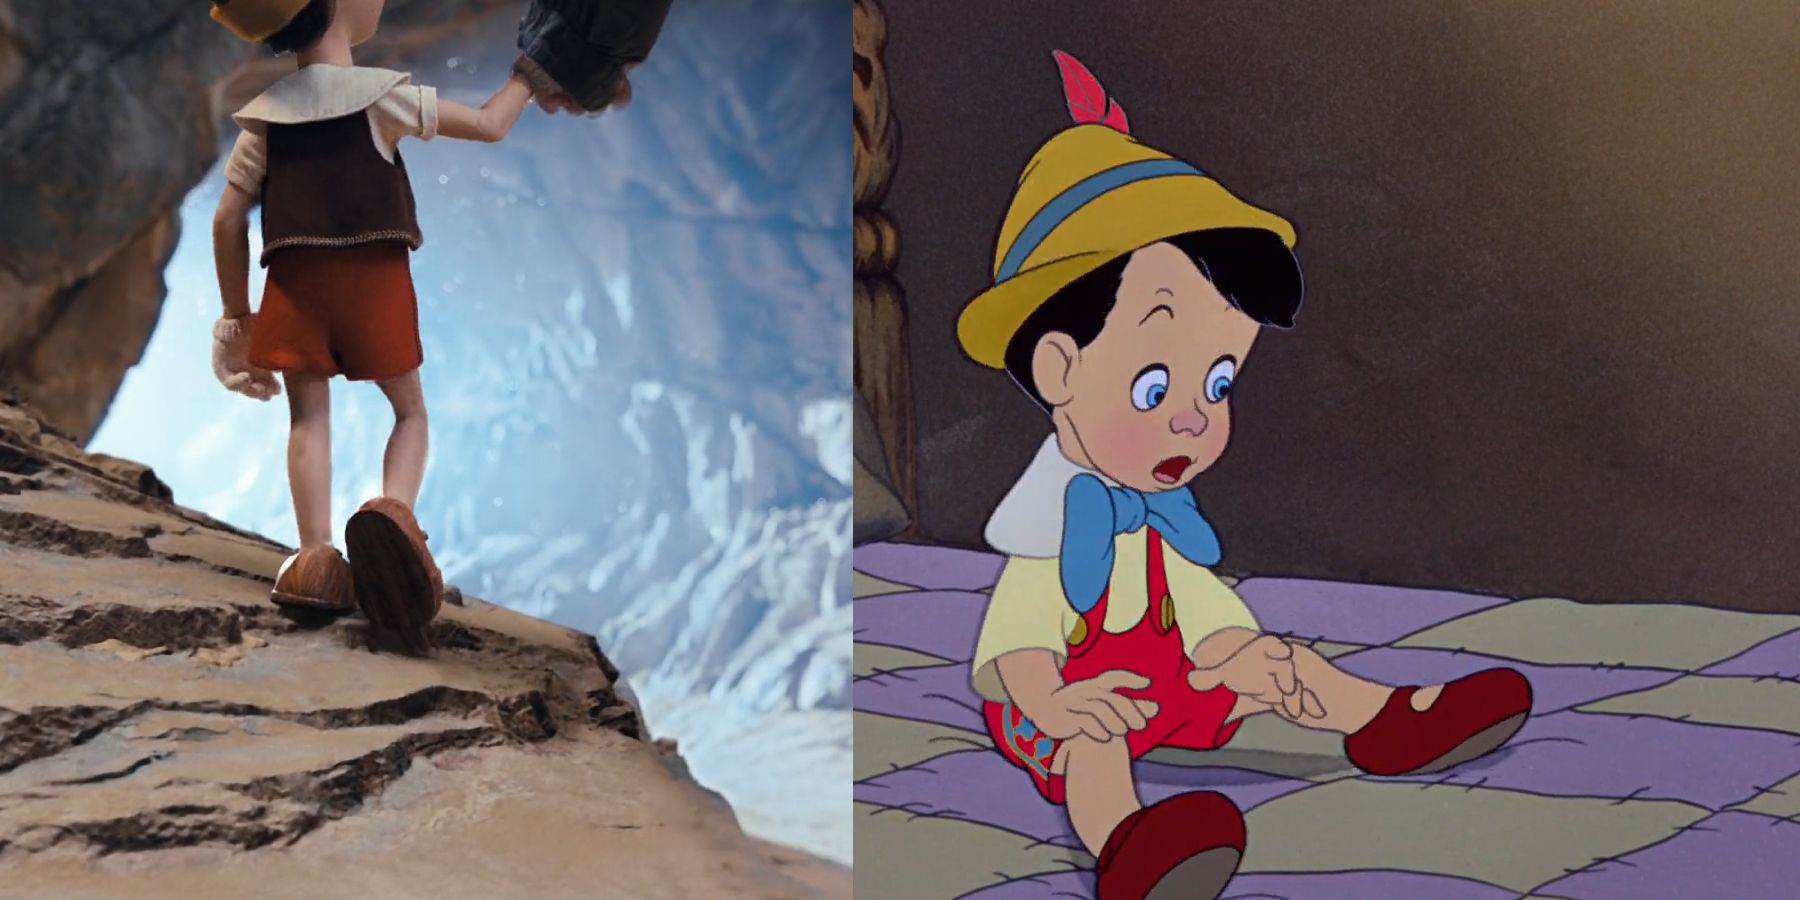 Both Pinocchios becoming real boys